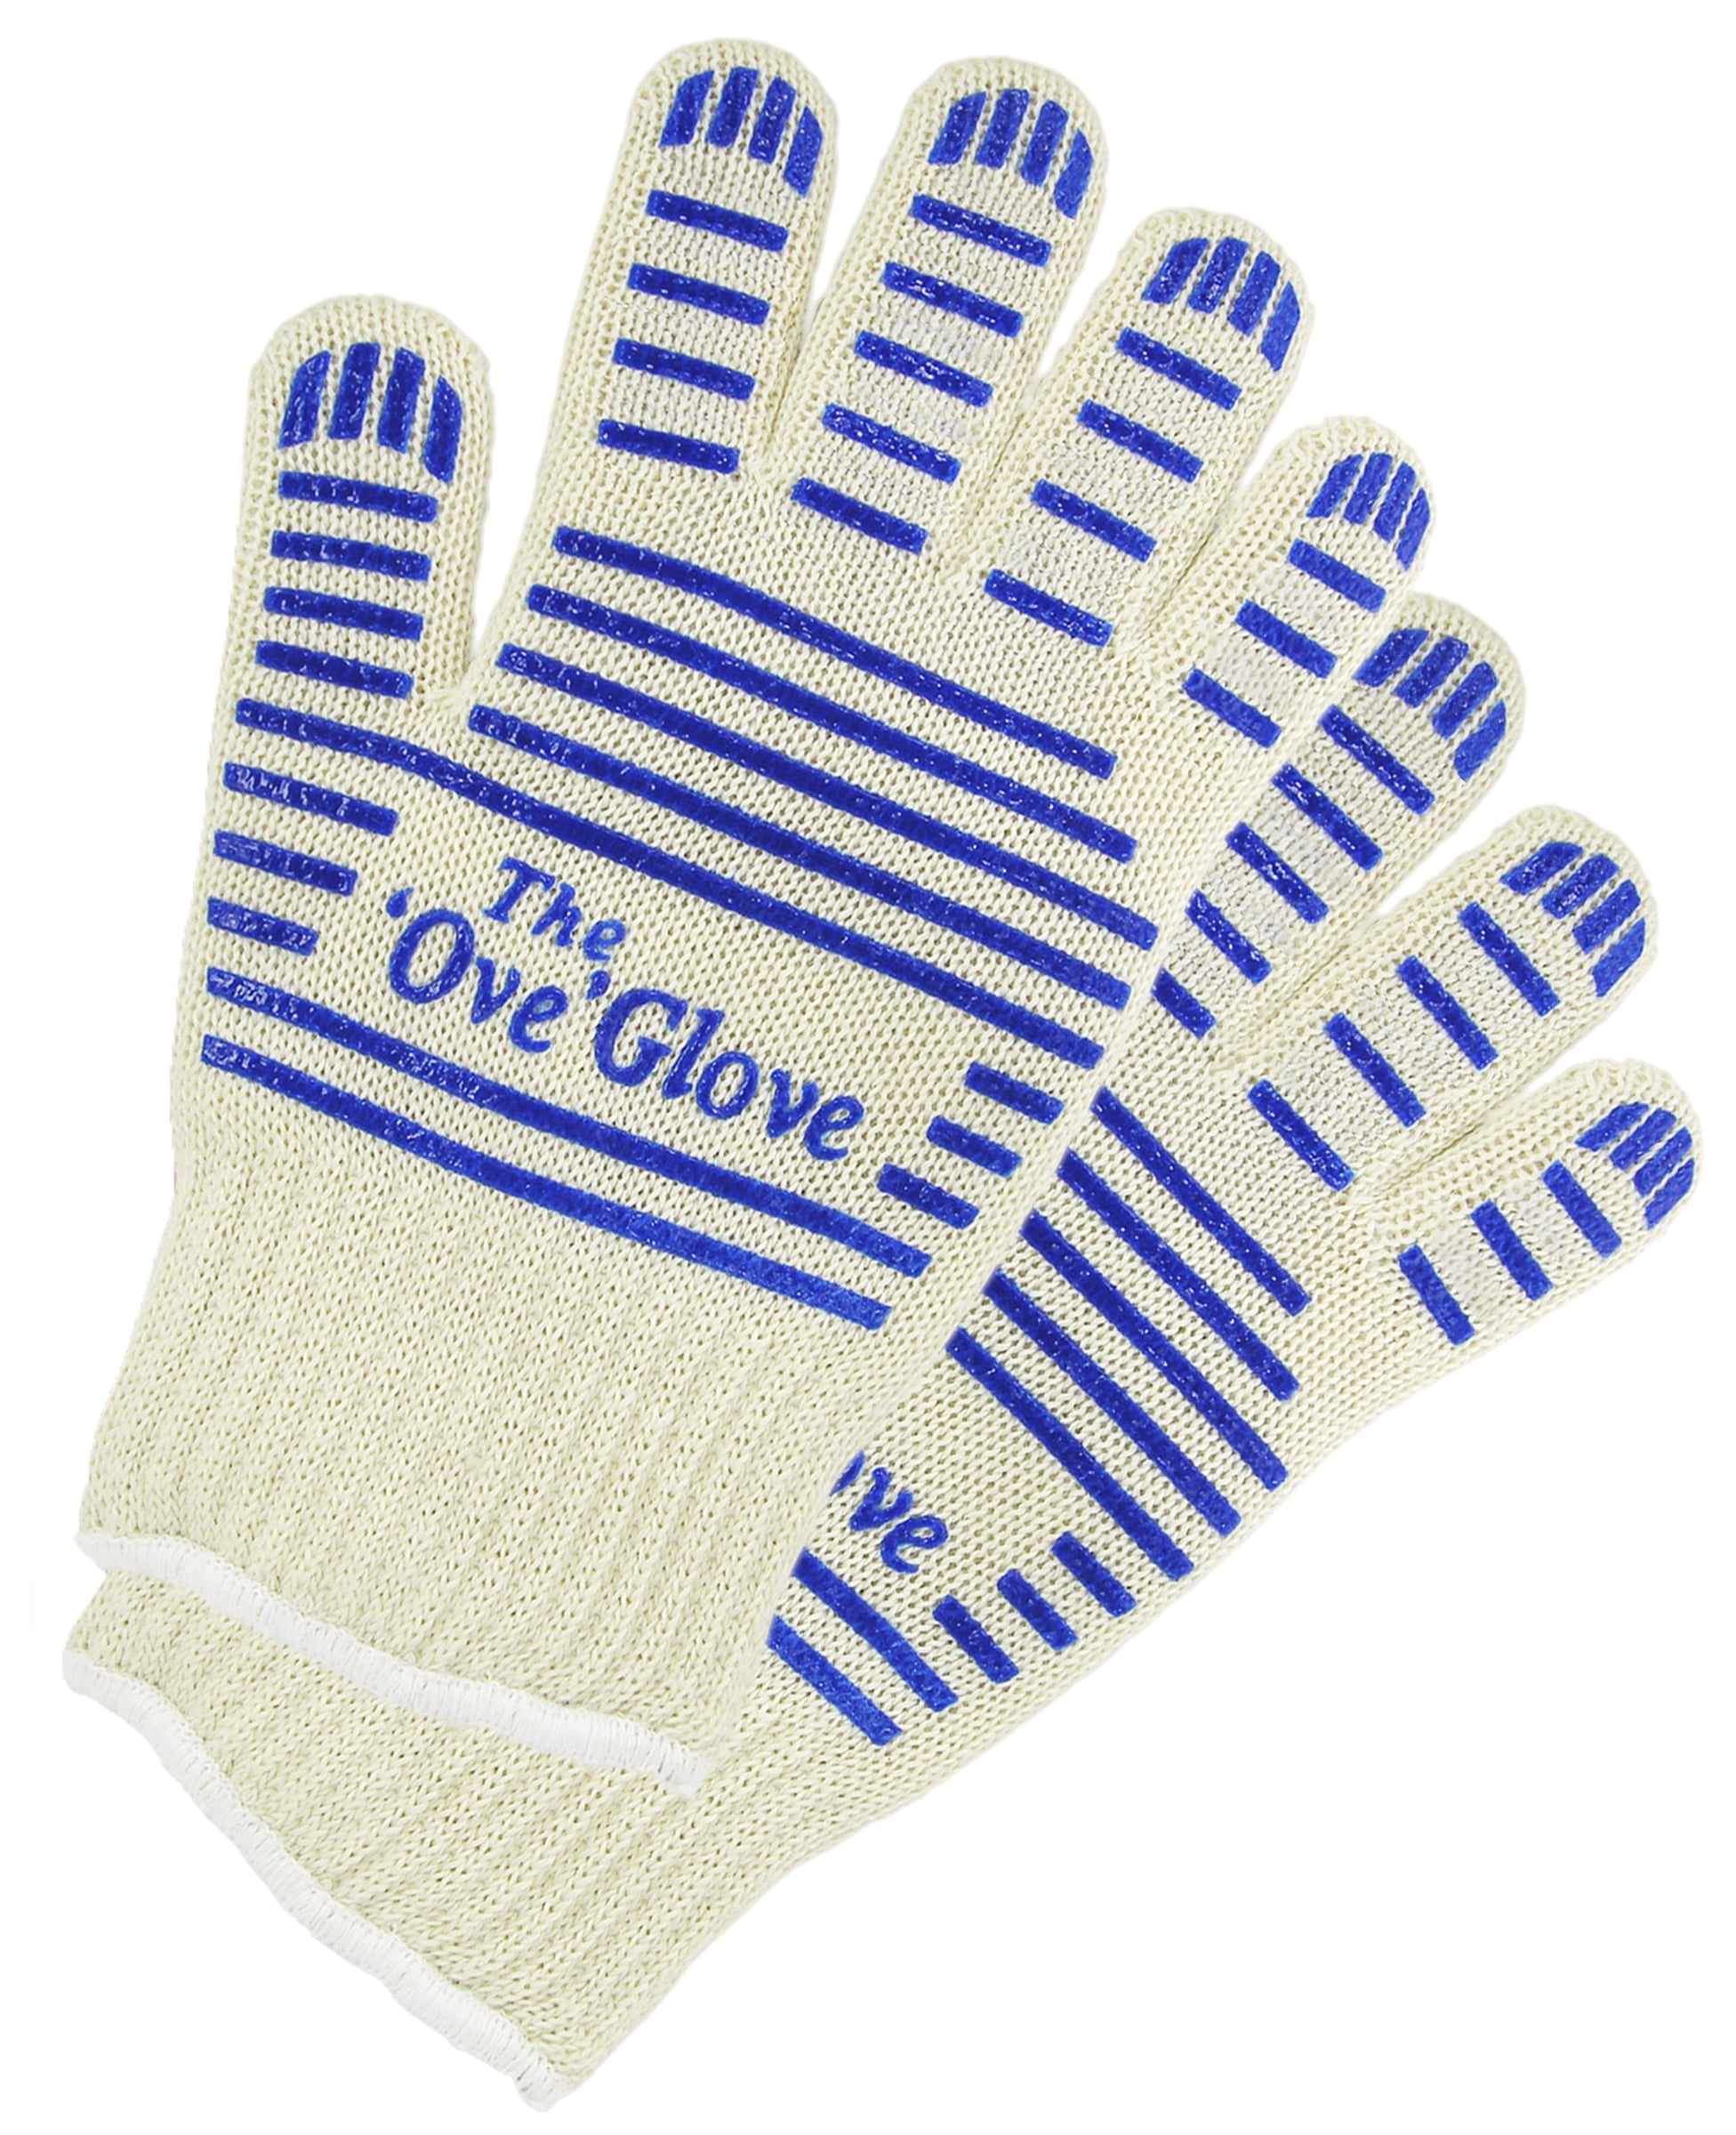 Ove Glove Multicolor Aramid/Cotton Oven Mitt - Ace Hardware